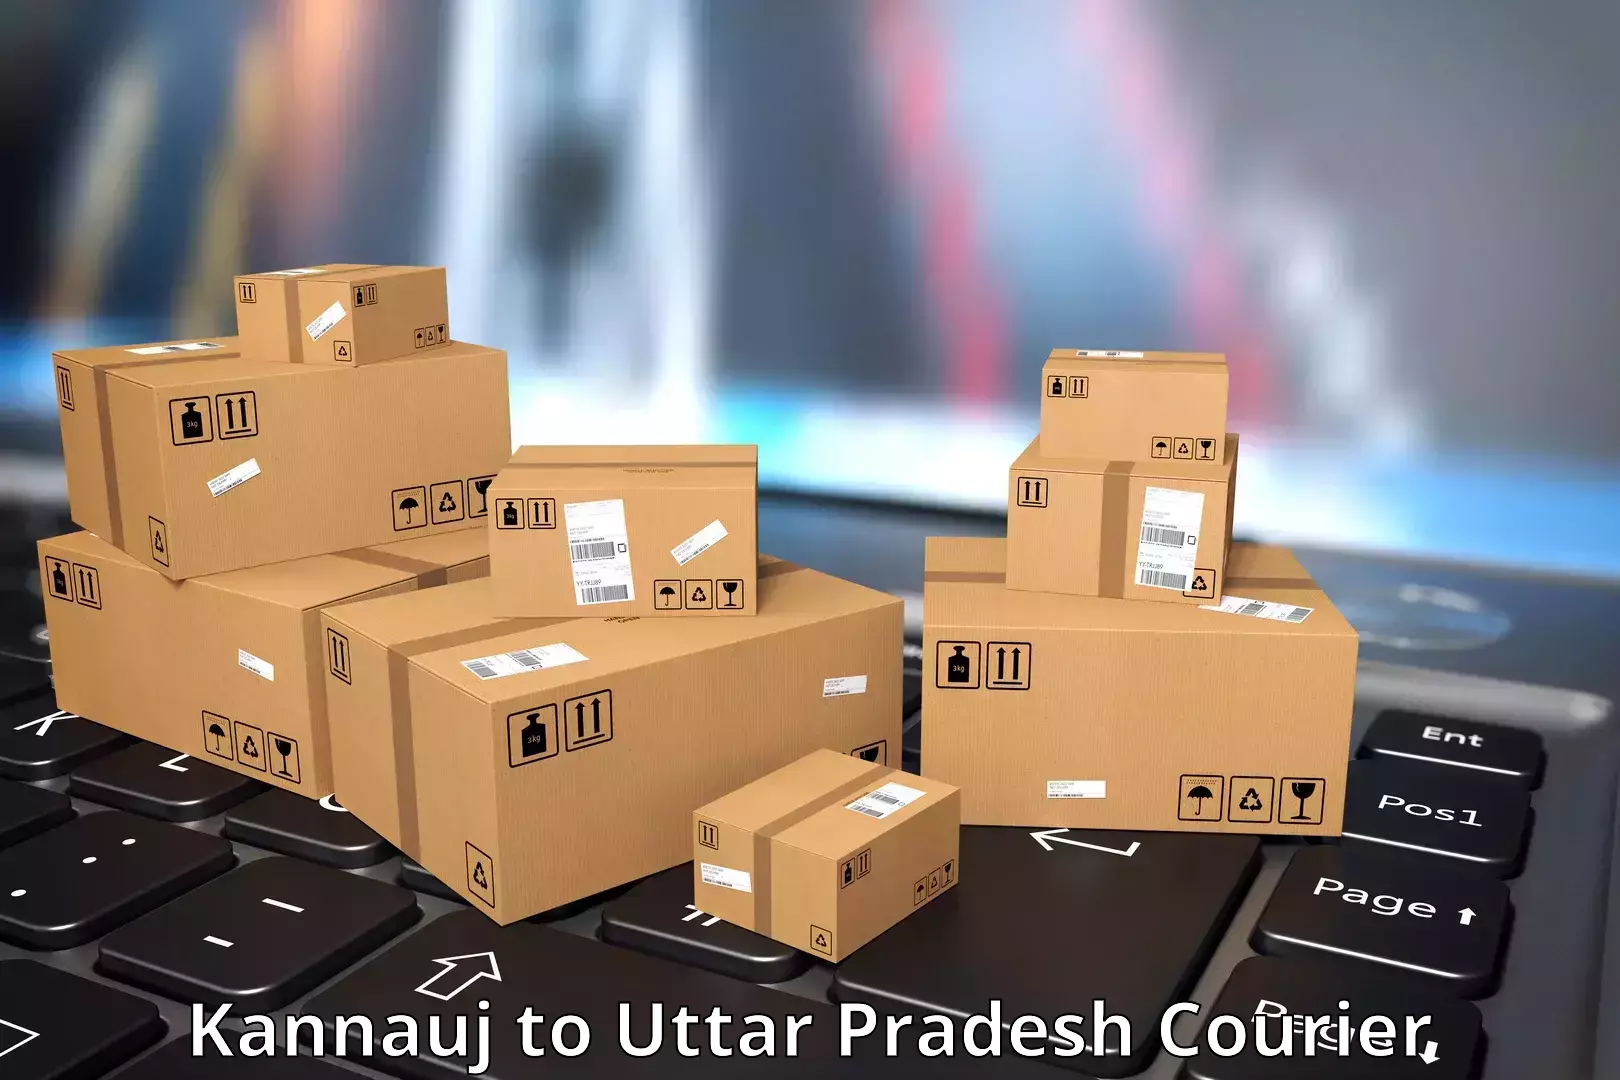 Advanced courier platforms Kannauj to Kanth